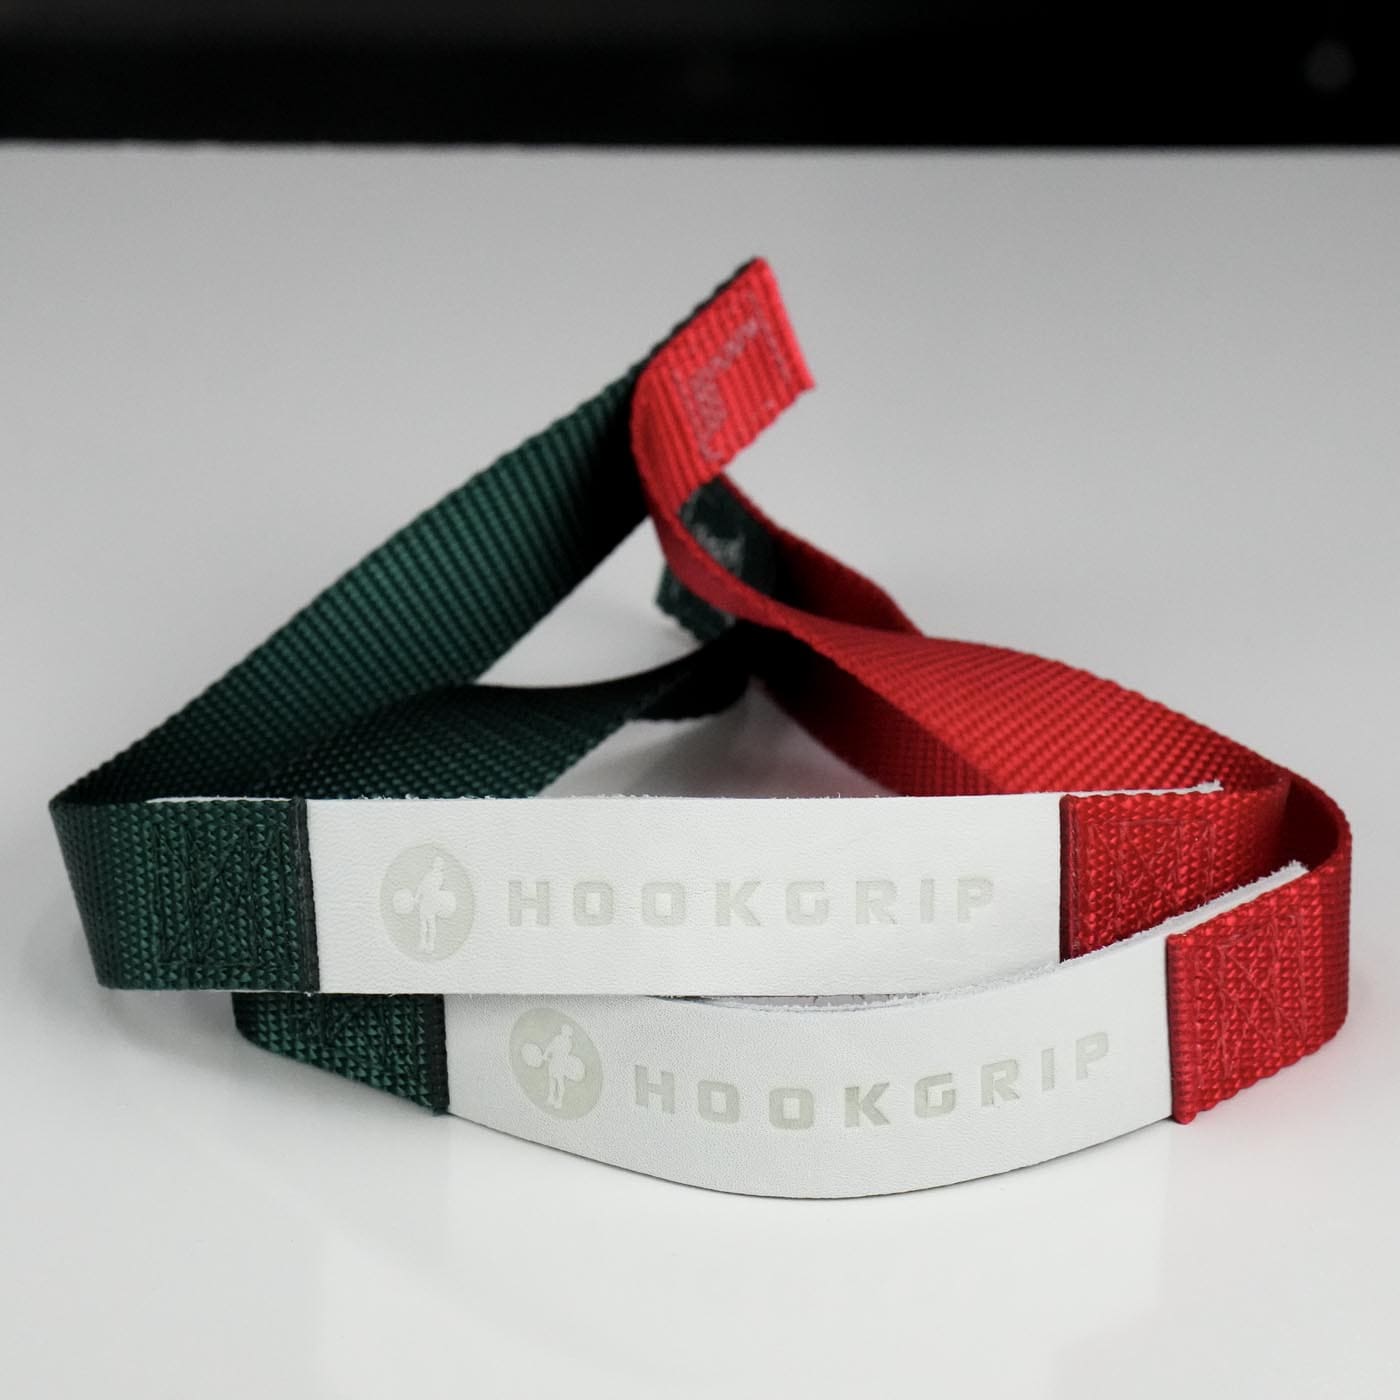 hookgrip weightlifting straps – hookgrip store